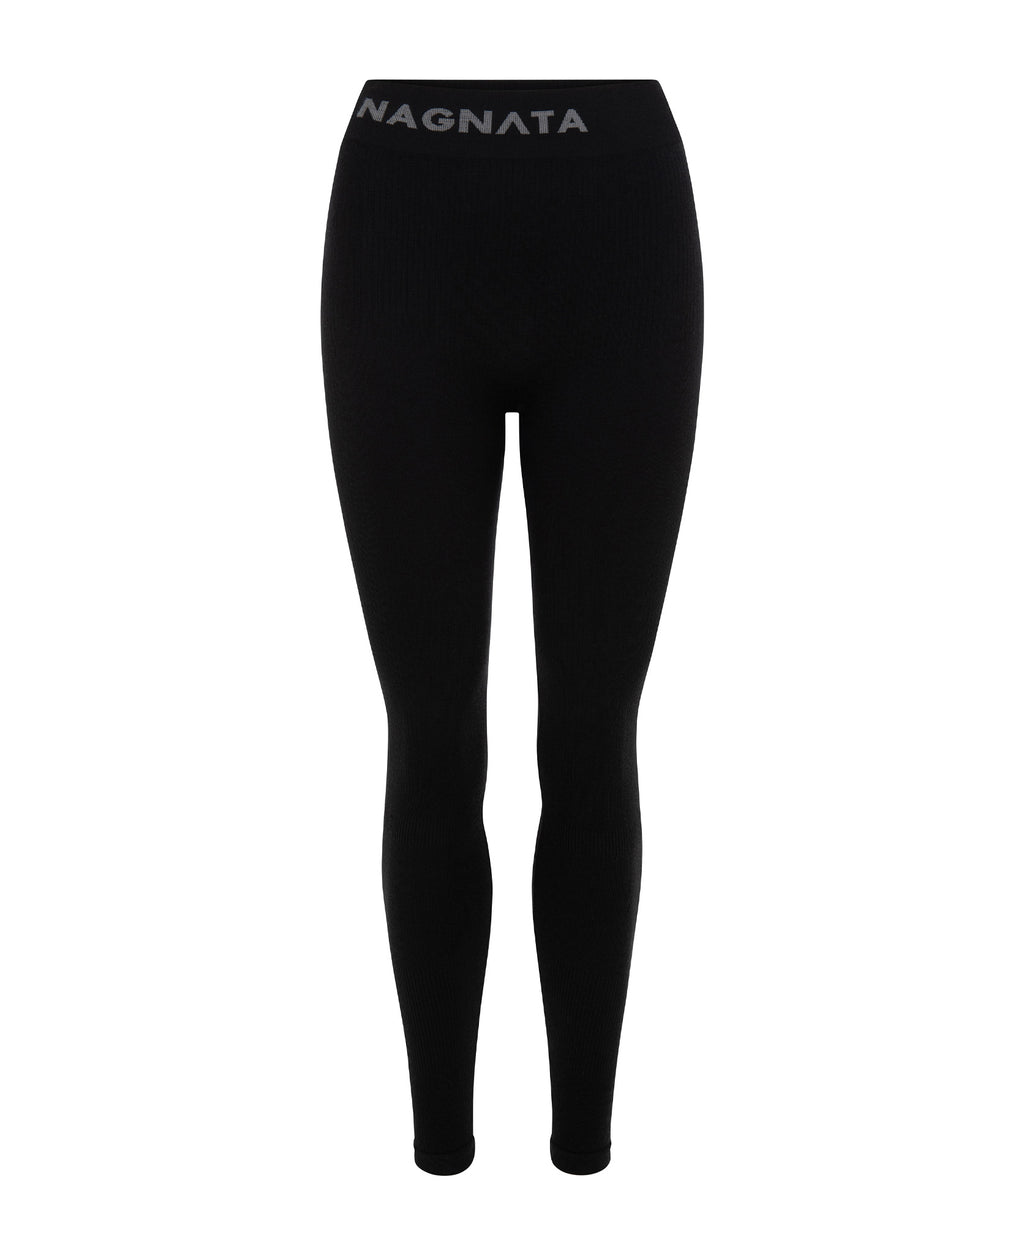 Legging skin rib black  skin rib legging - black - anahata fitwear